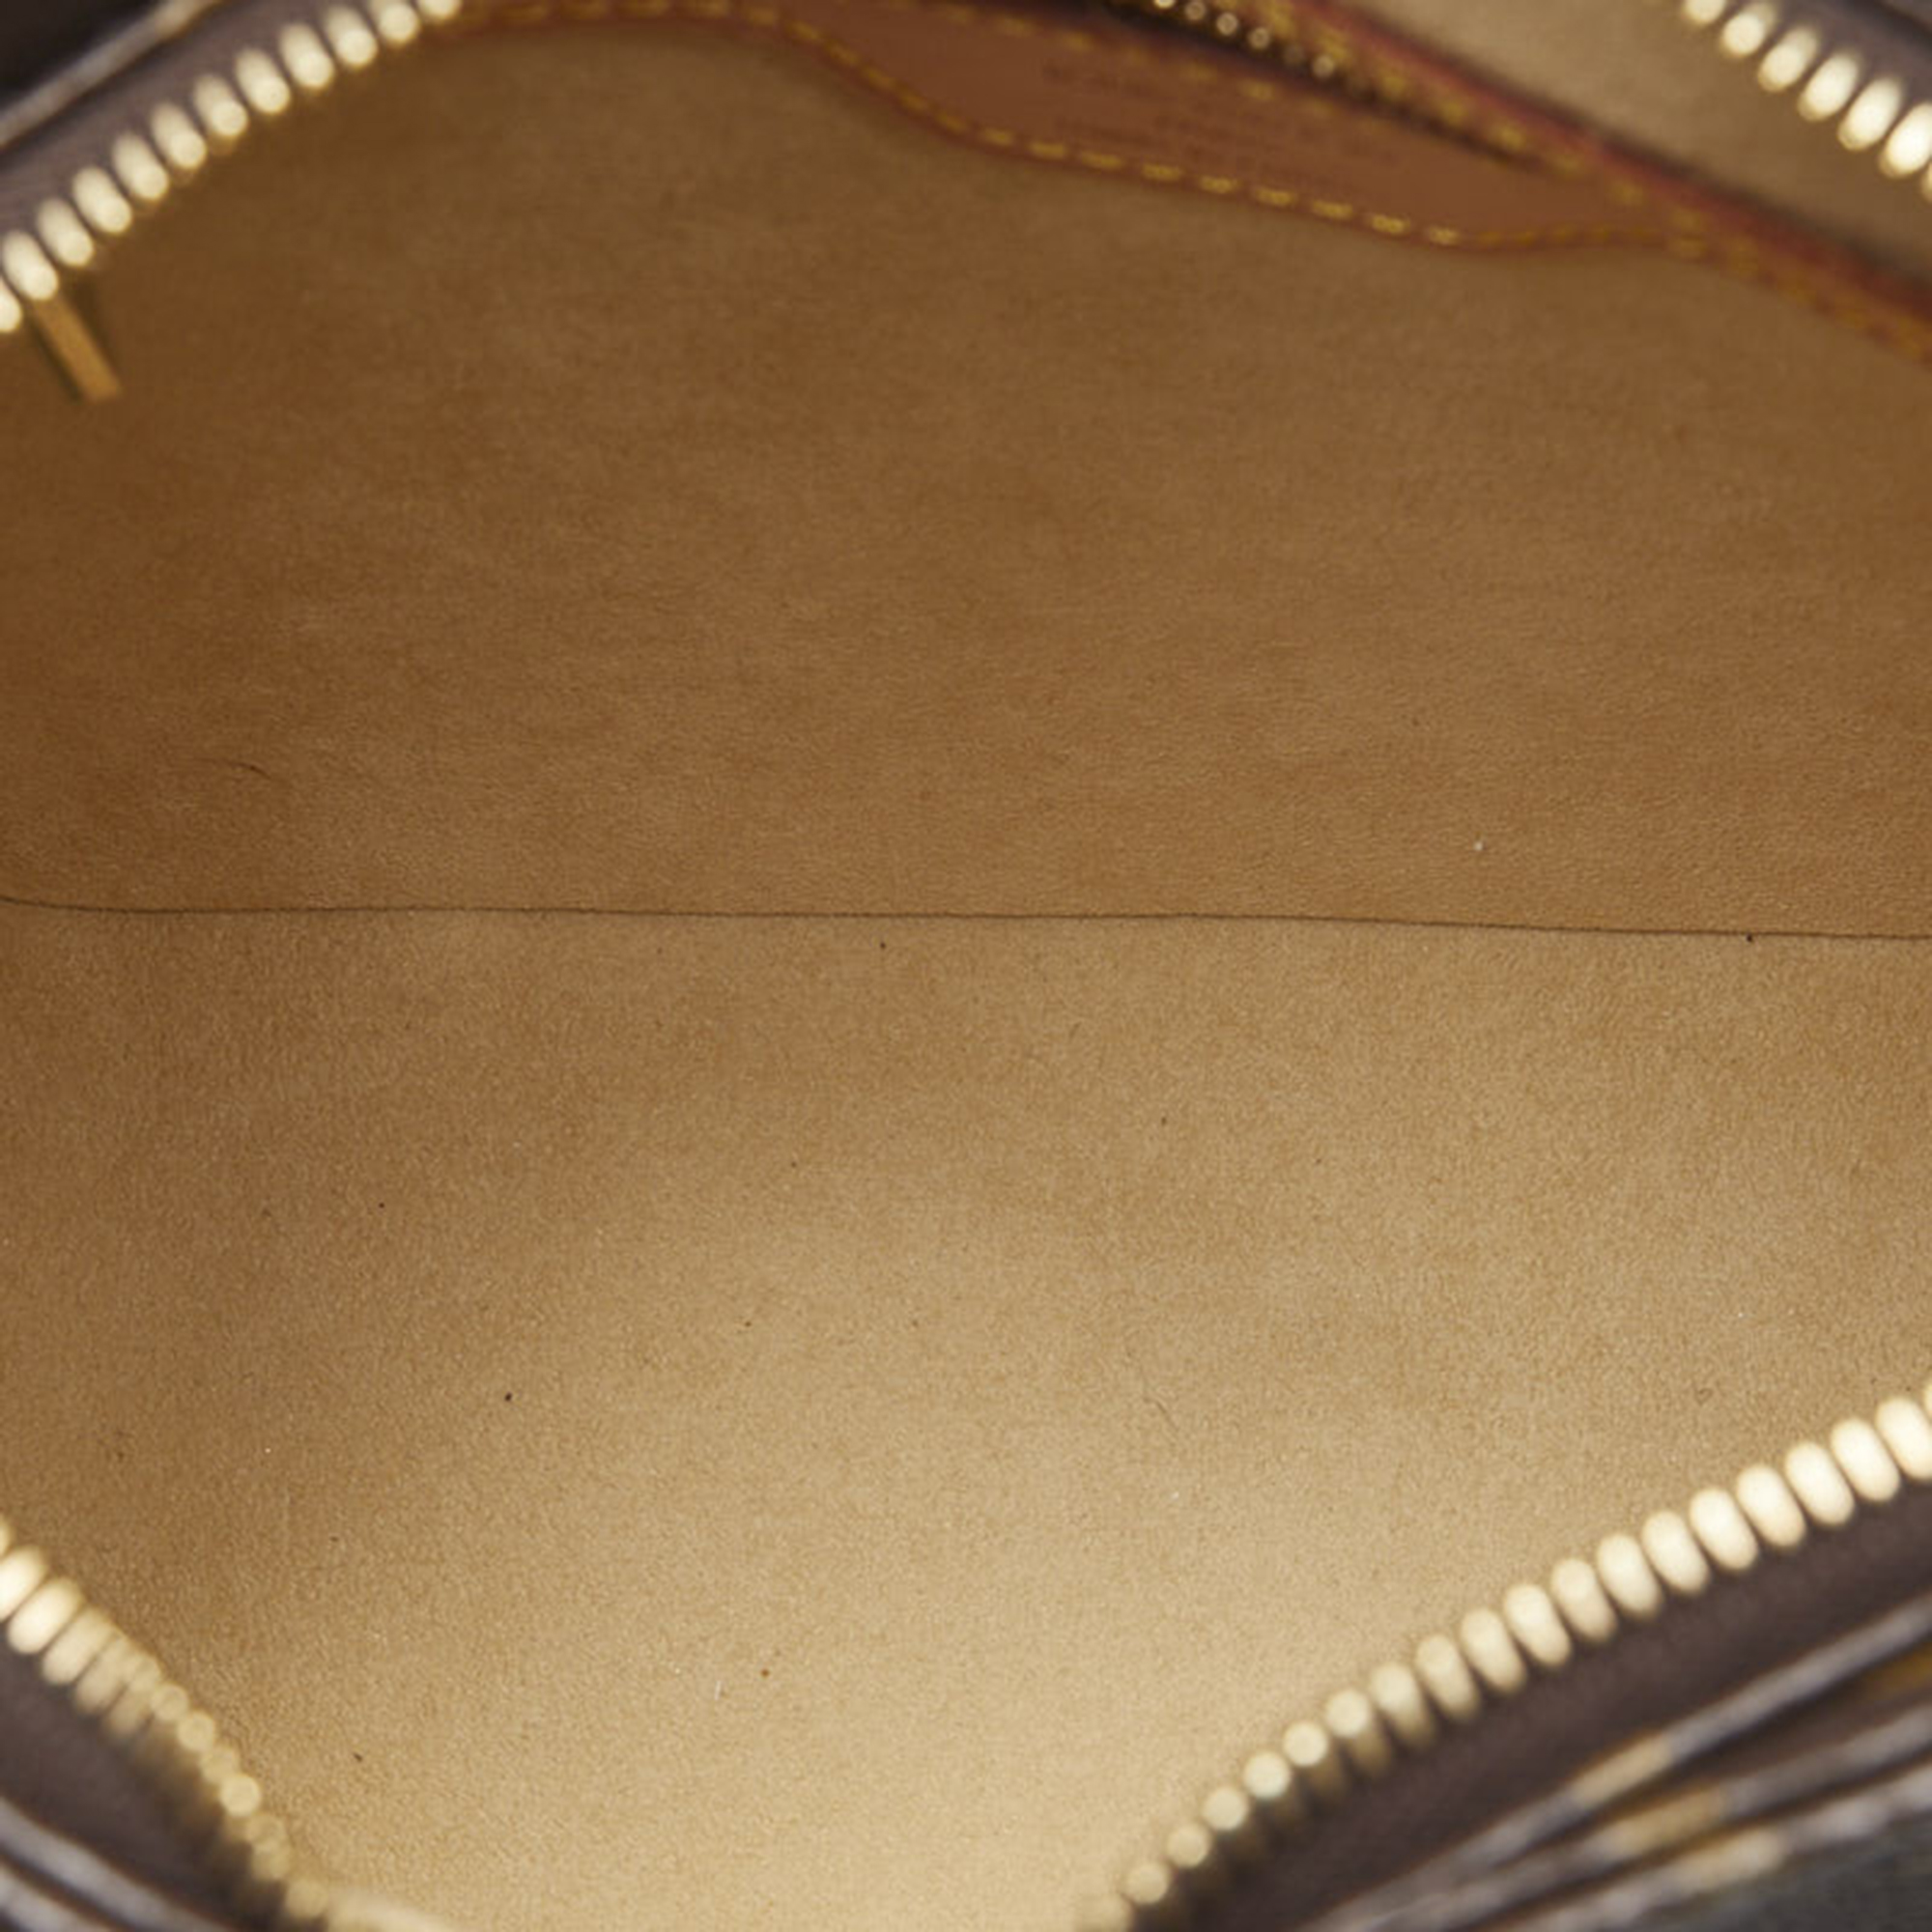 Louis Vuitton Brown Monogram Canvas Looping MM Shoulder Bag